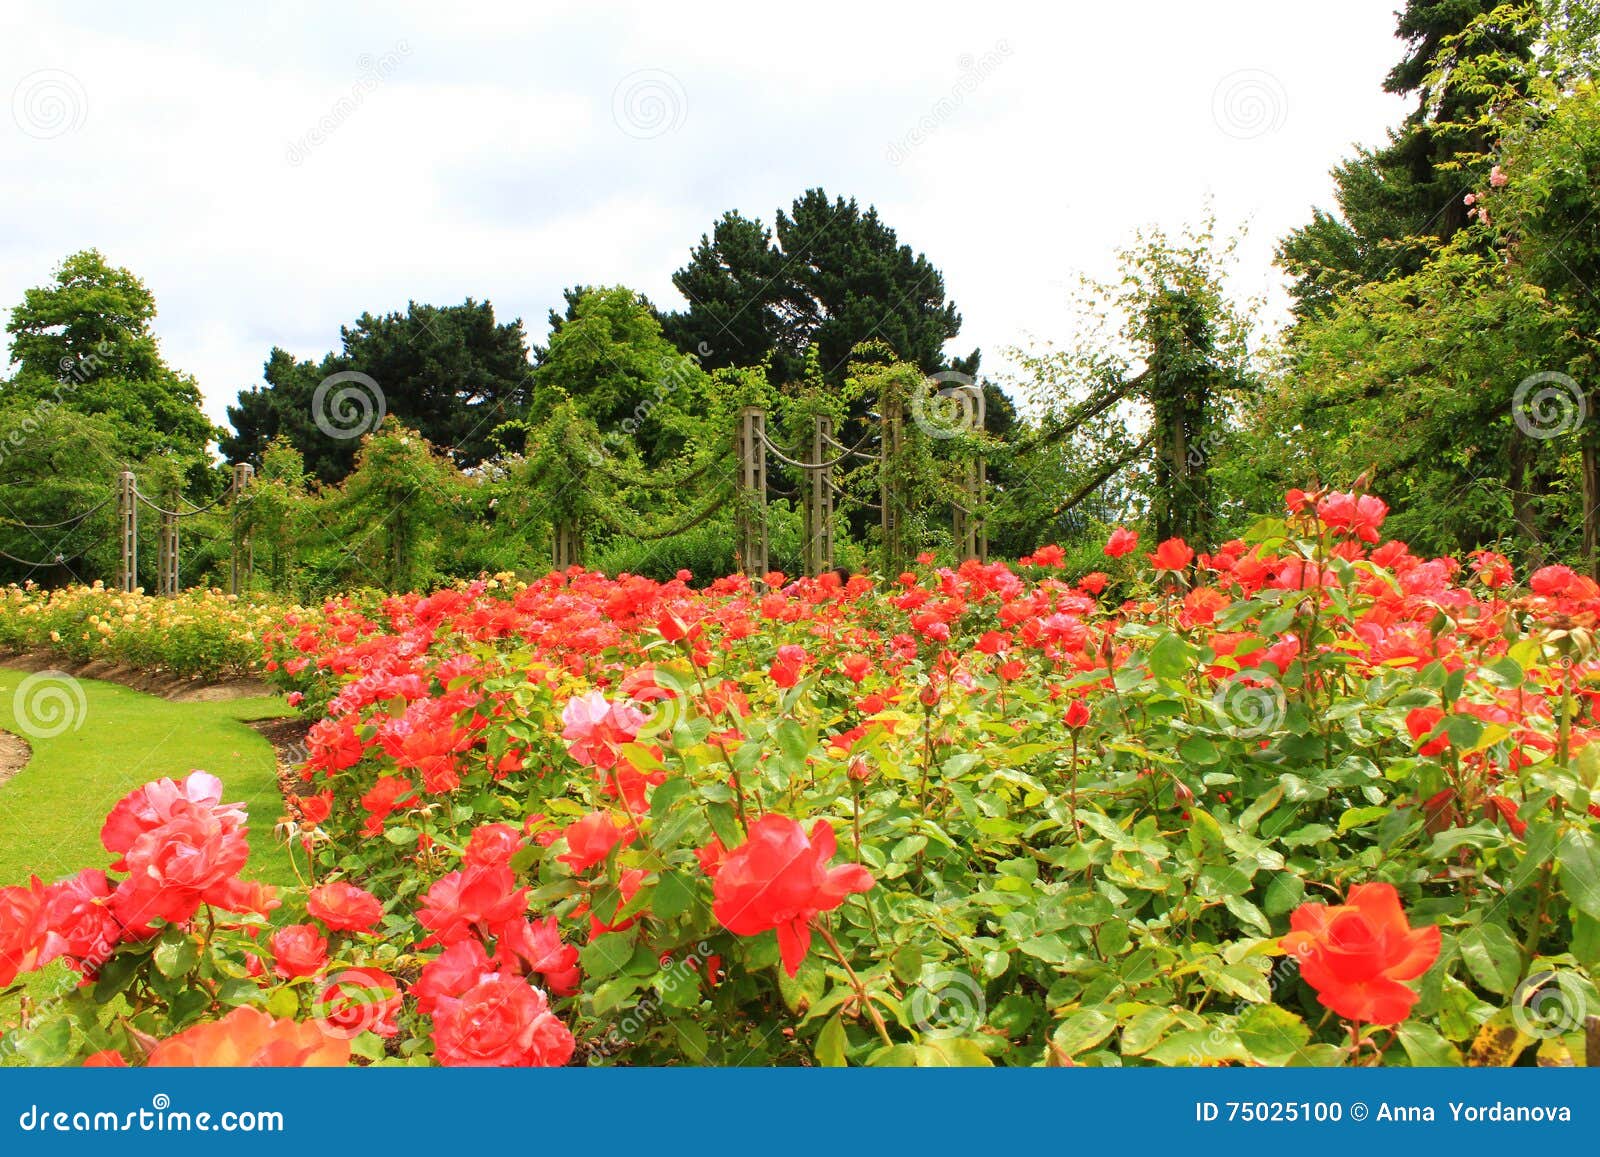 rose flower gardens in regents park london stock photo - image of